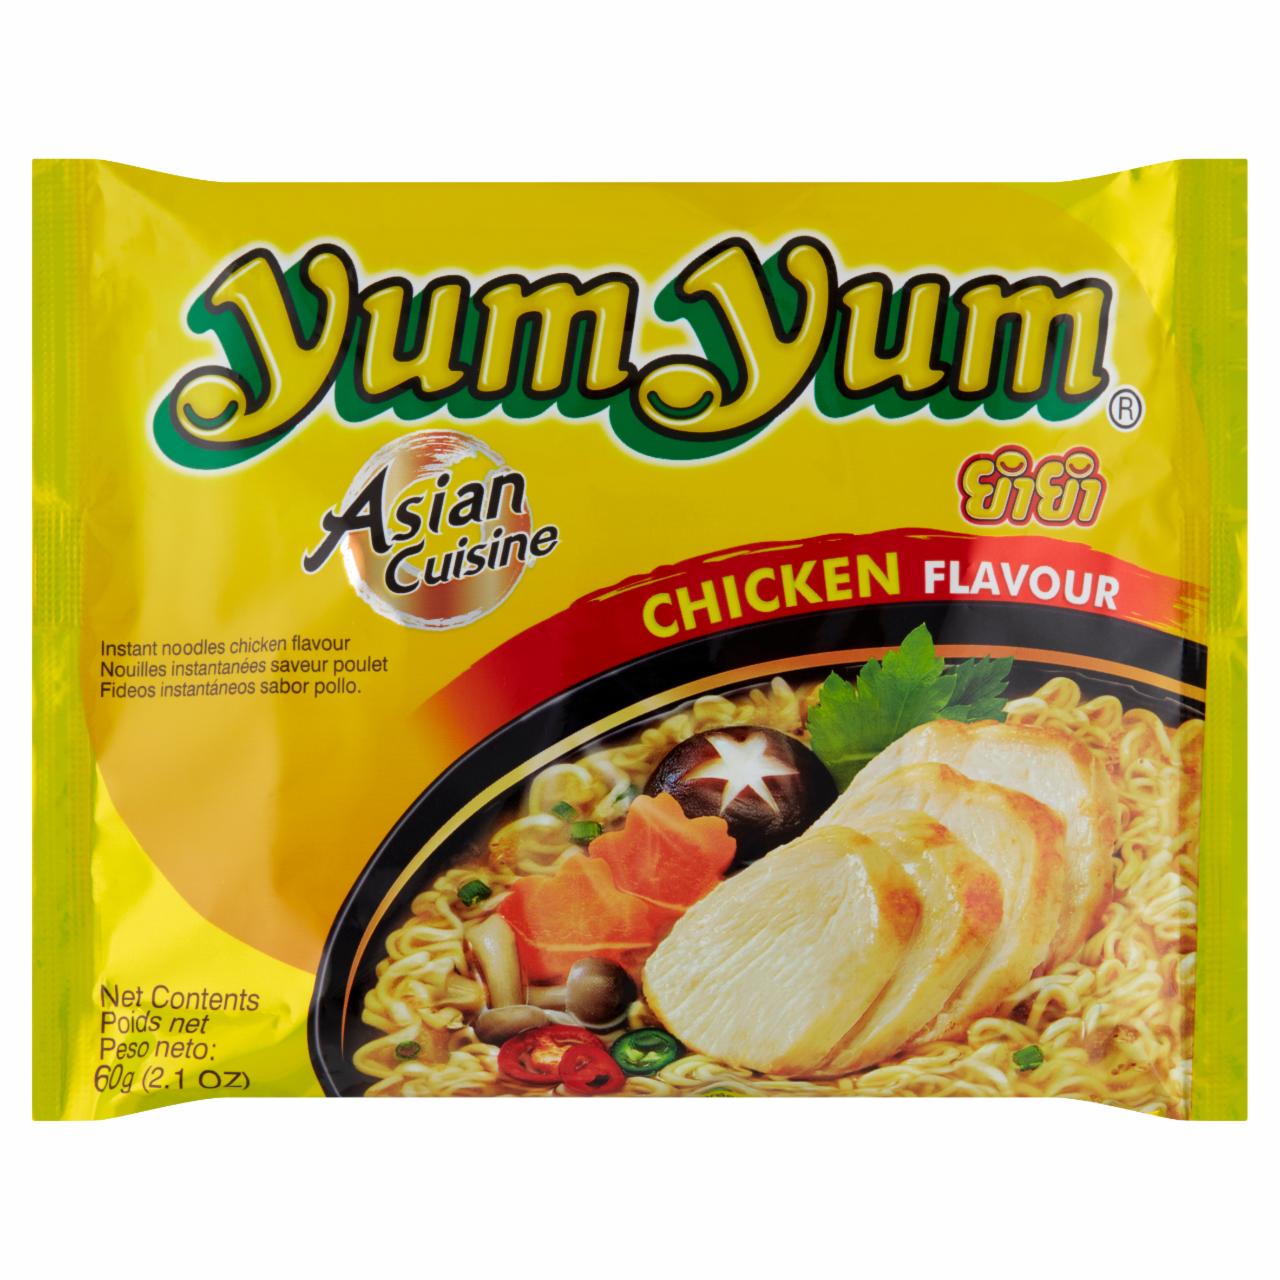 Photo - Chicken flavour instant noodles Yum Yum